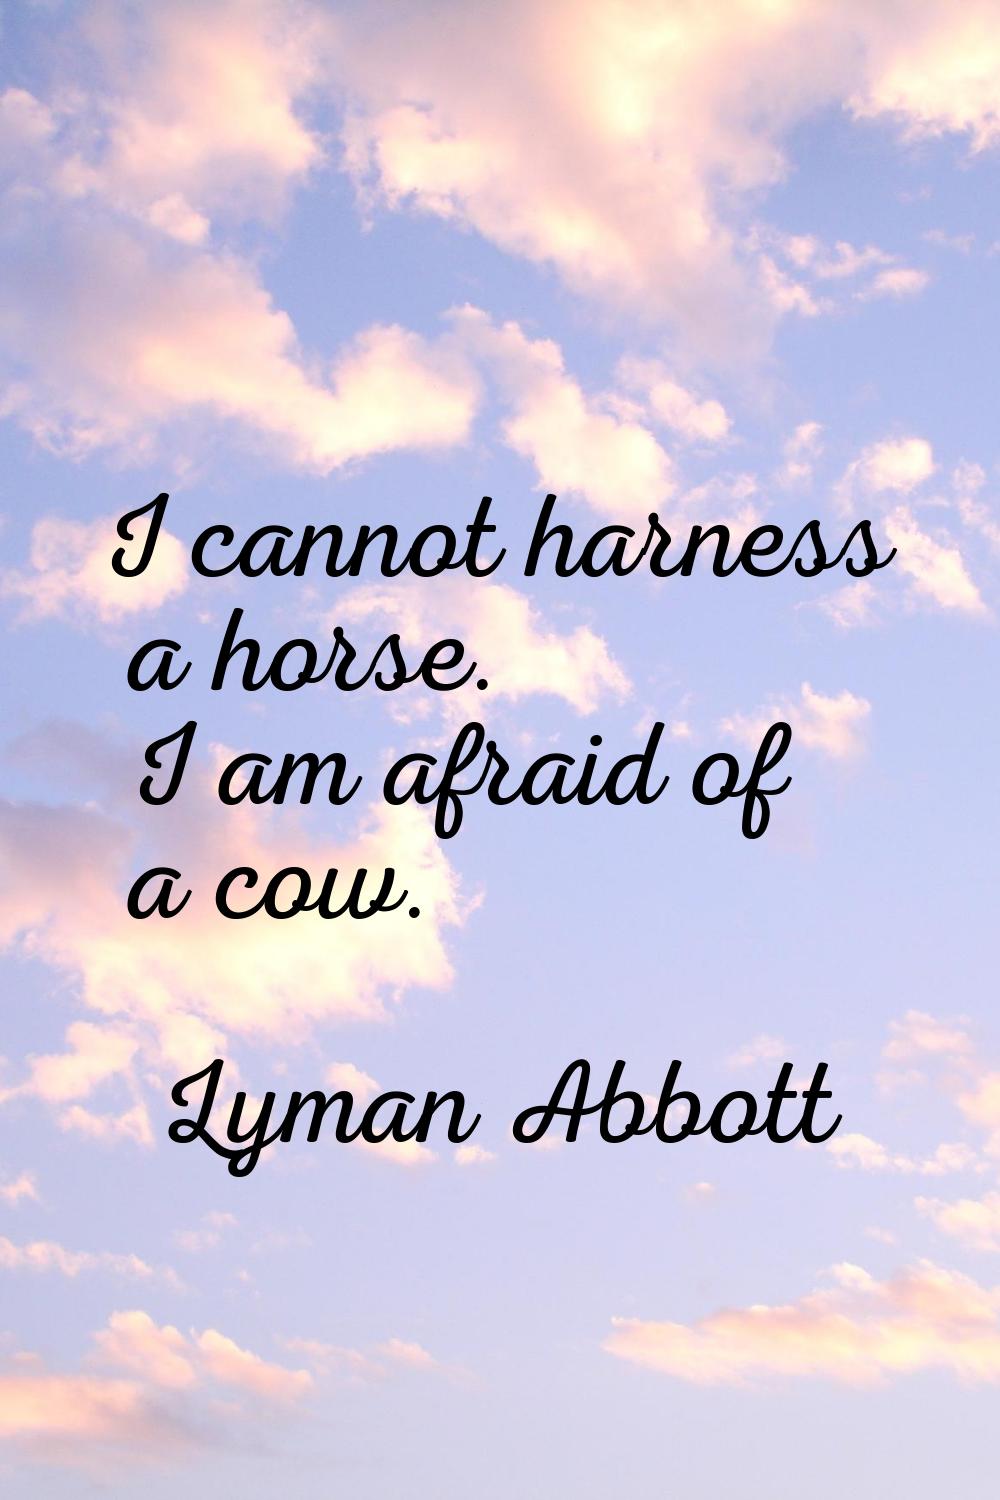 I cannot harness a horse. I am afraid of a cow.